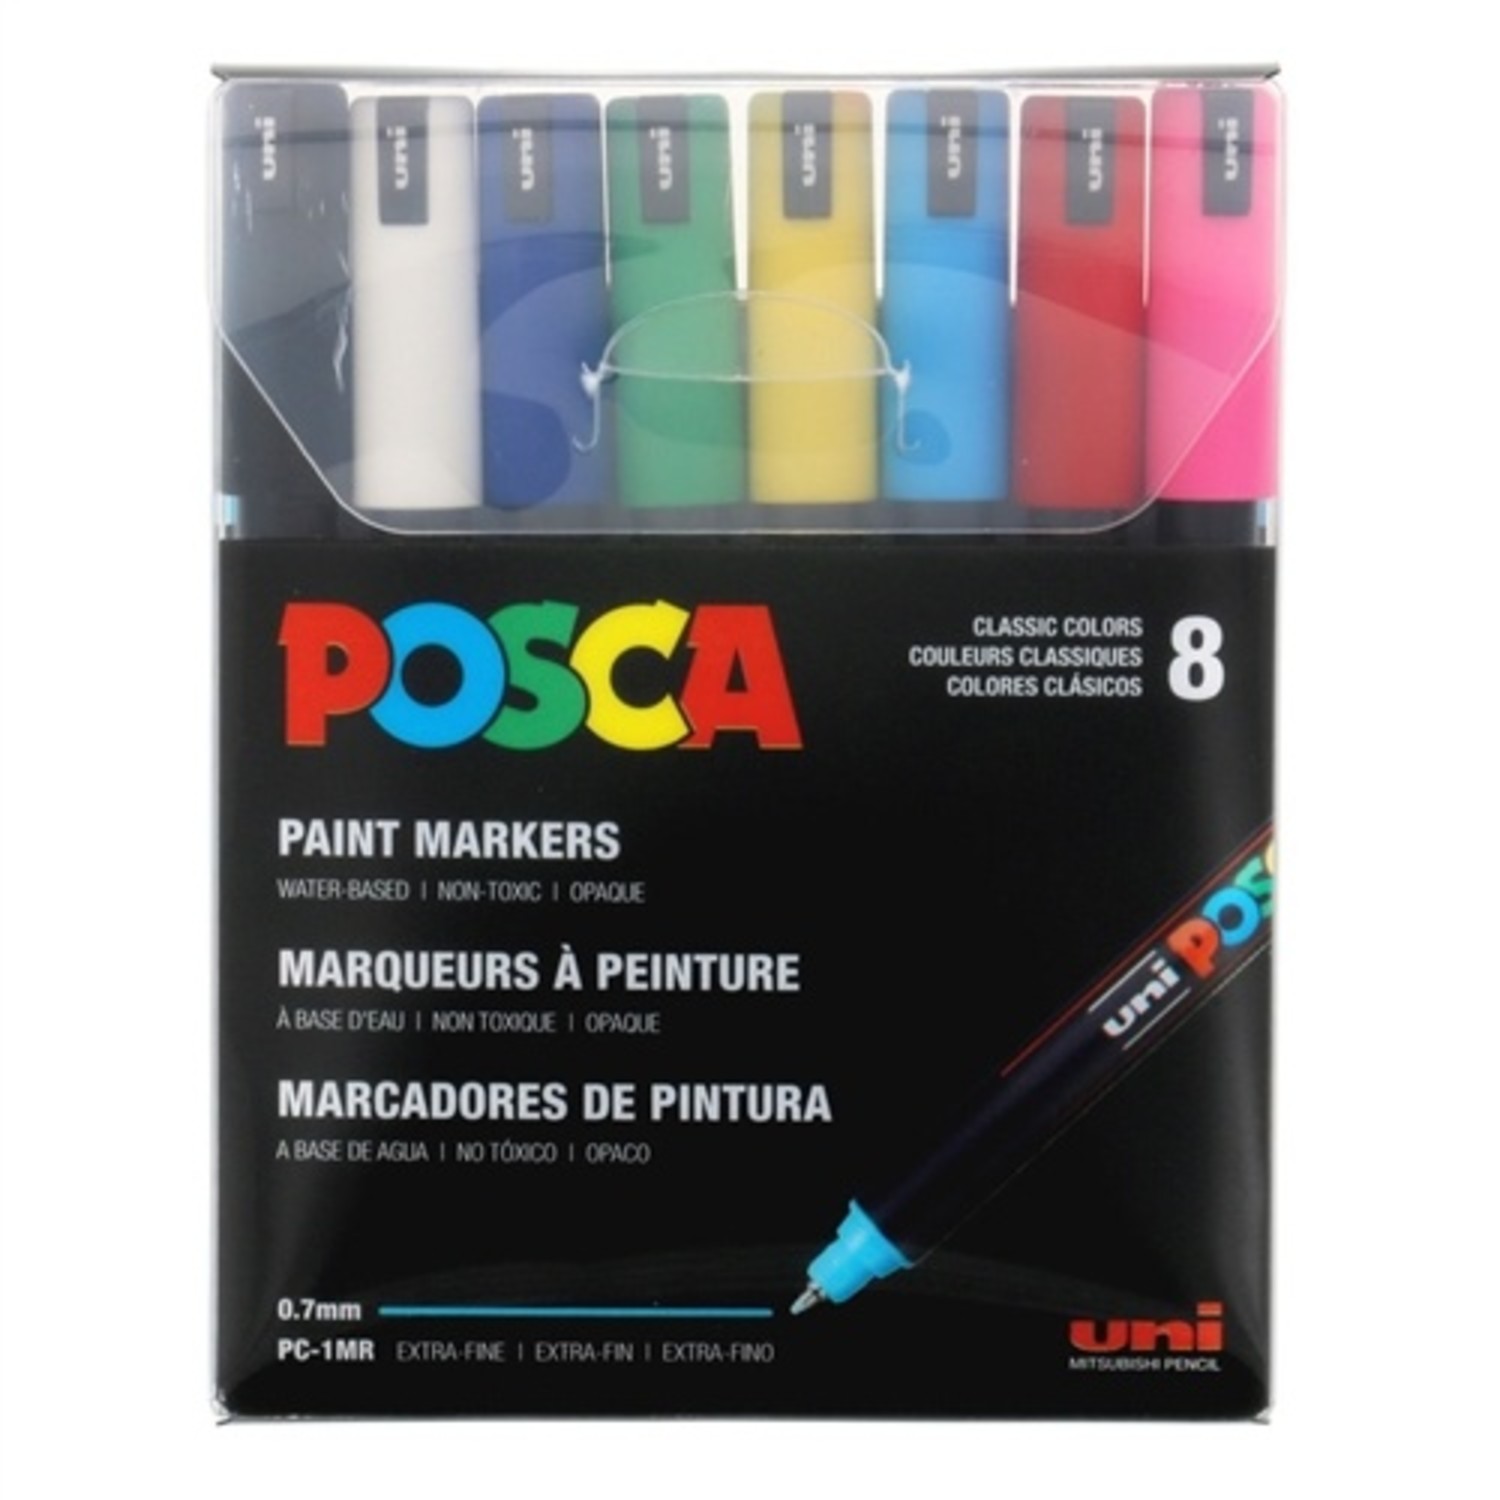 uni POSCA Acrylic Paint Marker - PC-5M Medium - 8 Dark Colors Set 